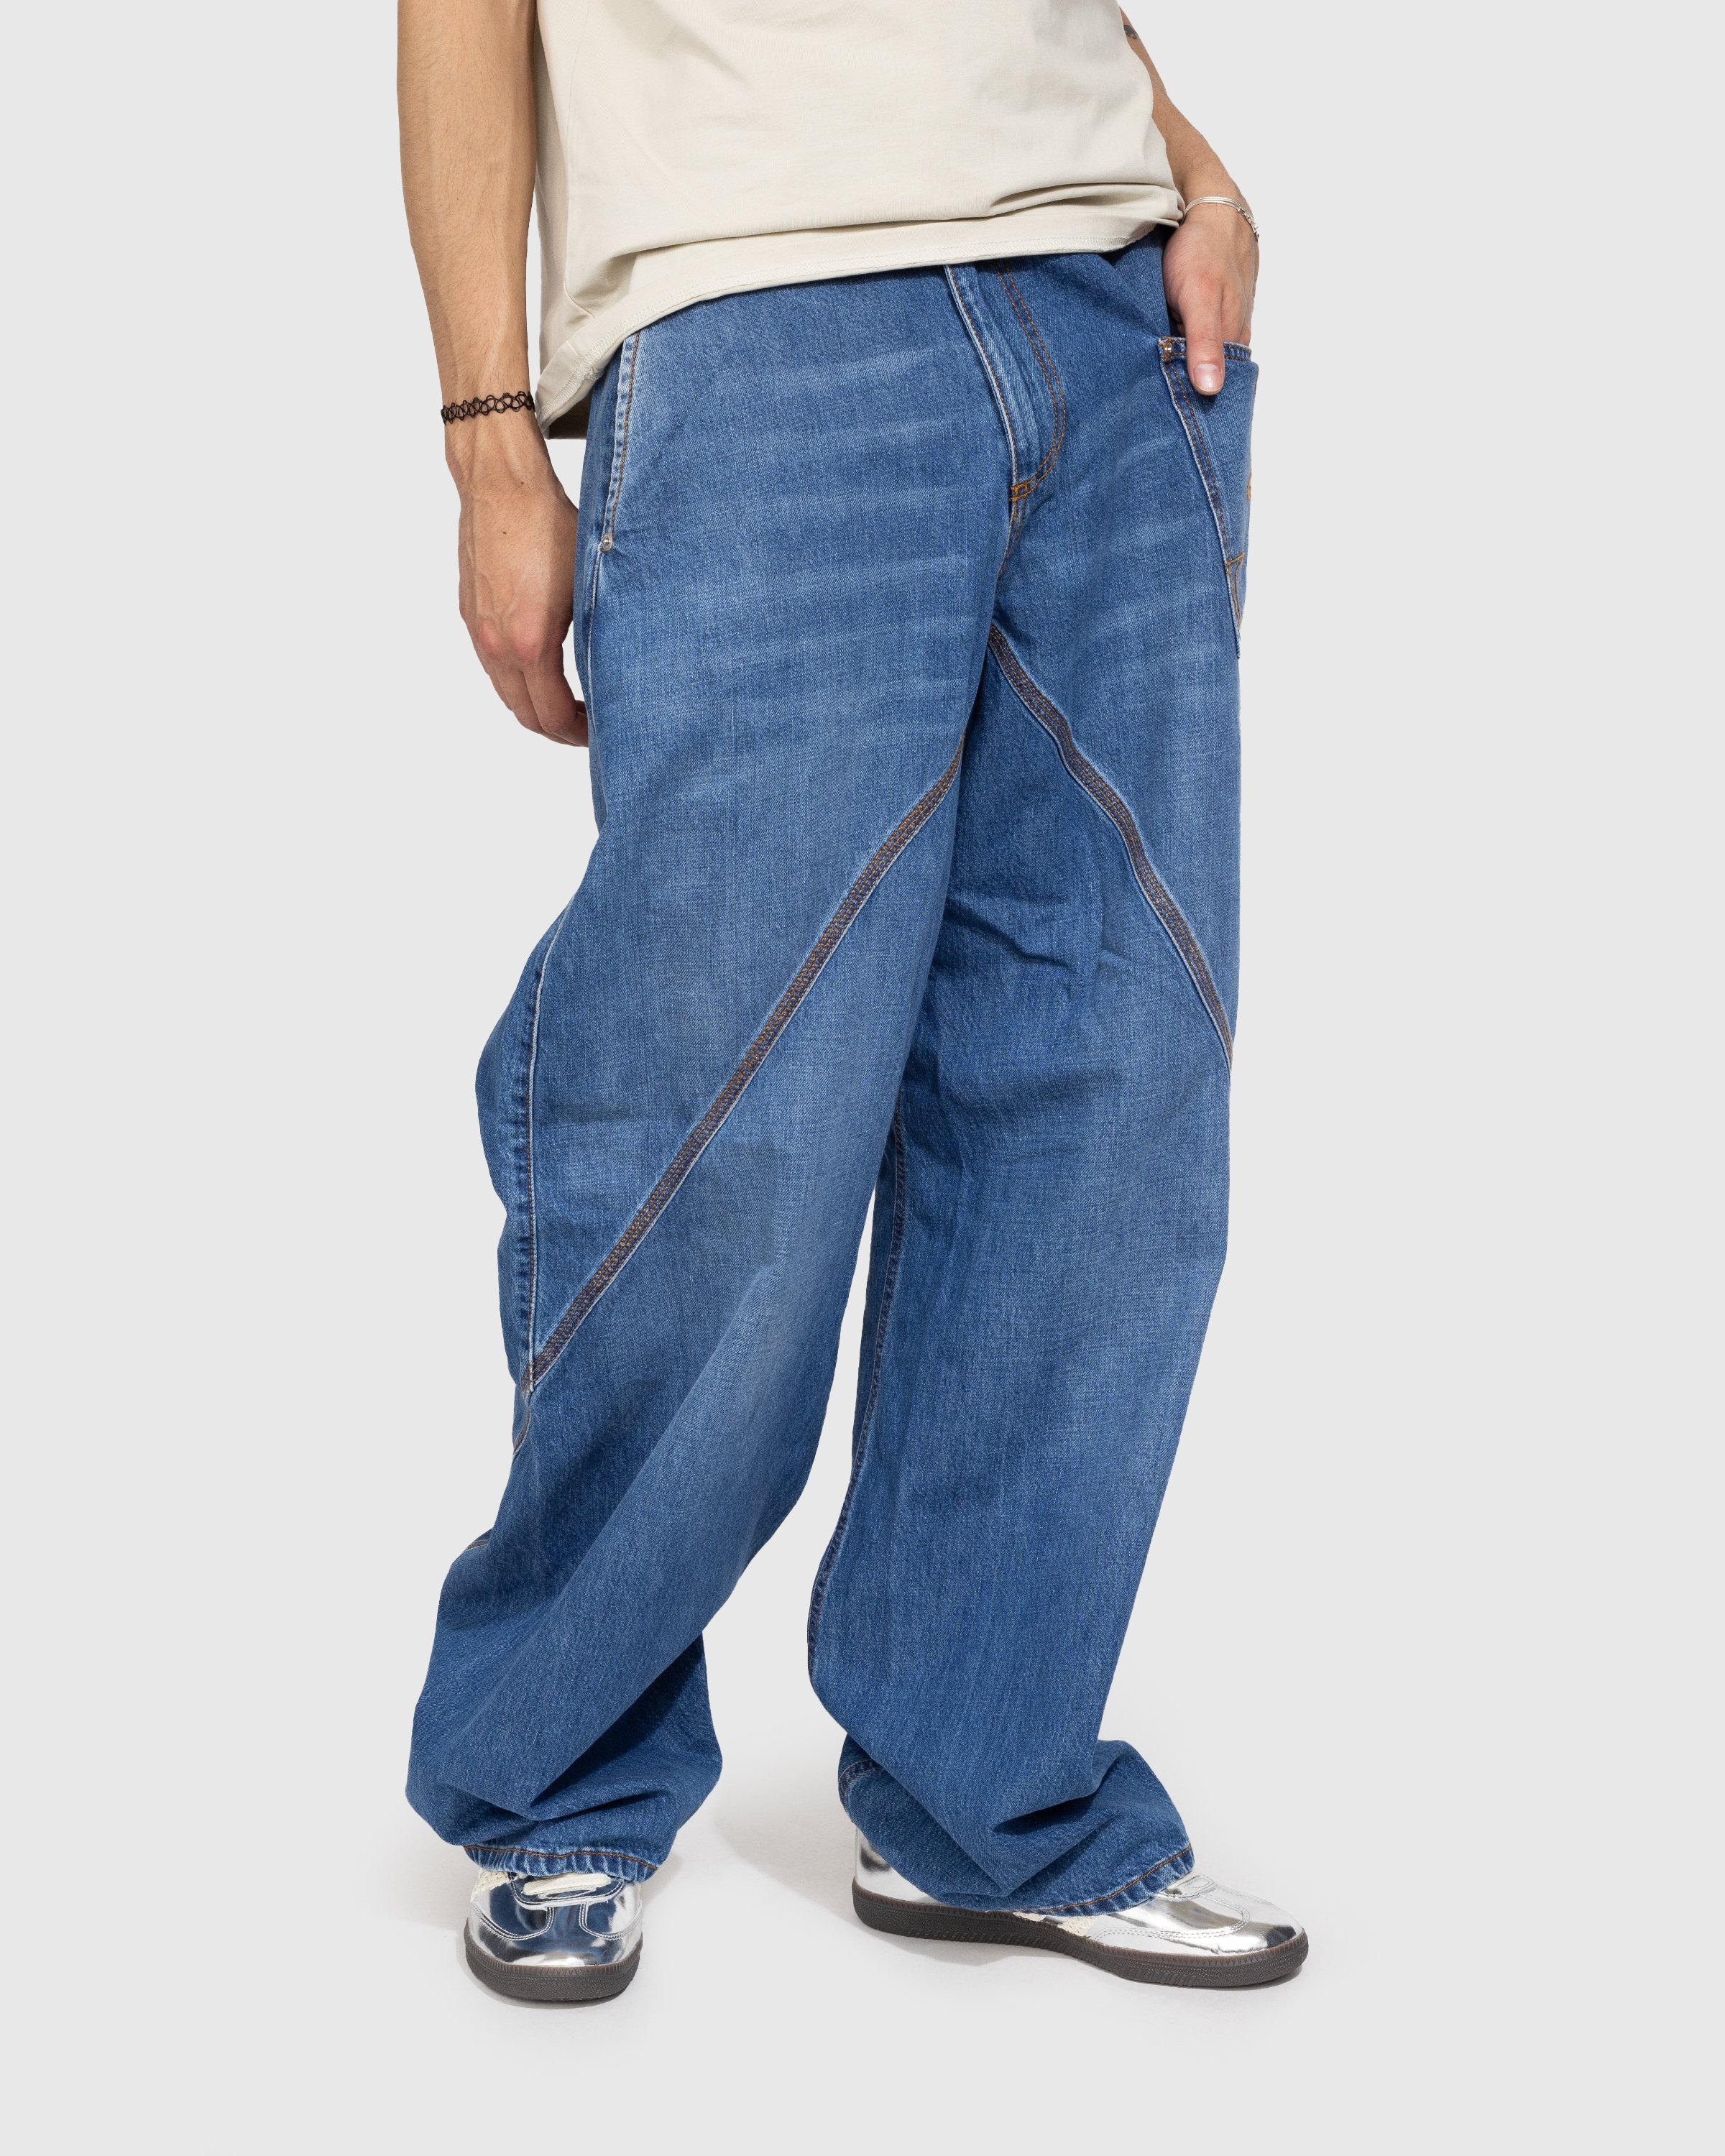 J.W. Anderson – Twisted Workwear Jeans Blue - Pants - Blue - Image 3